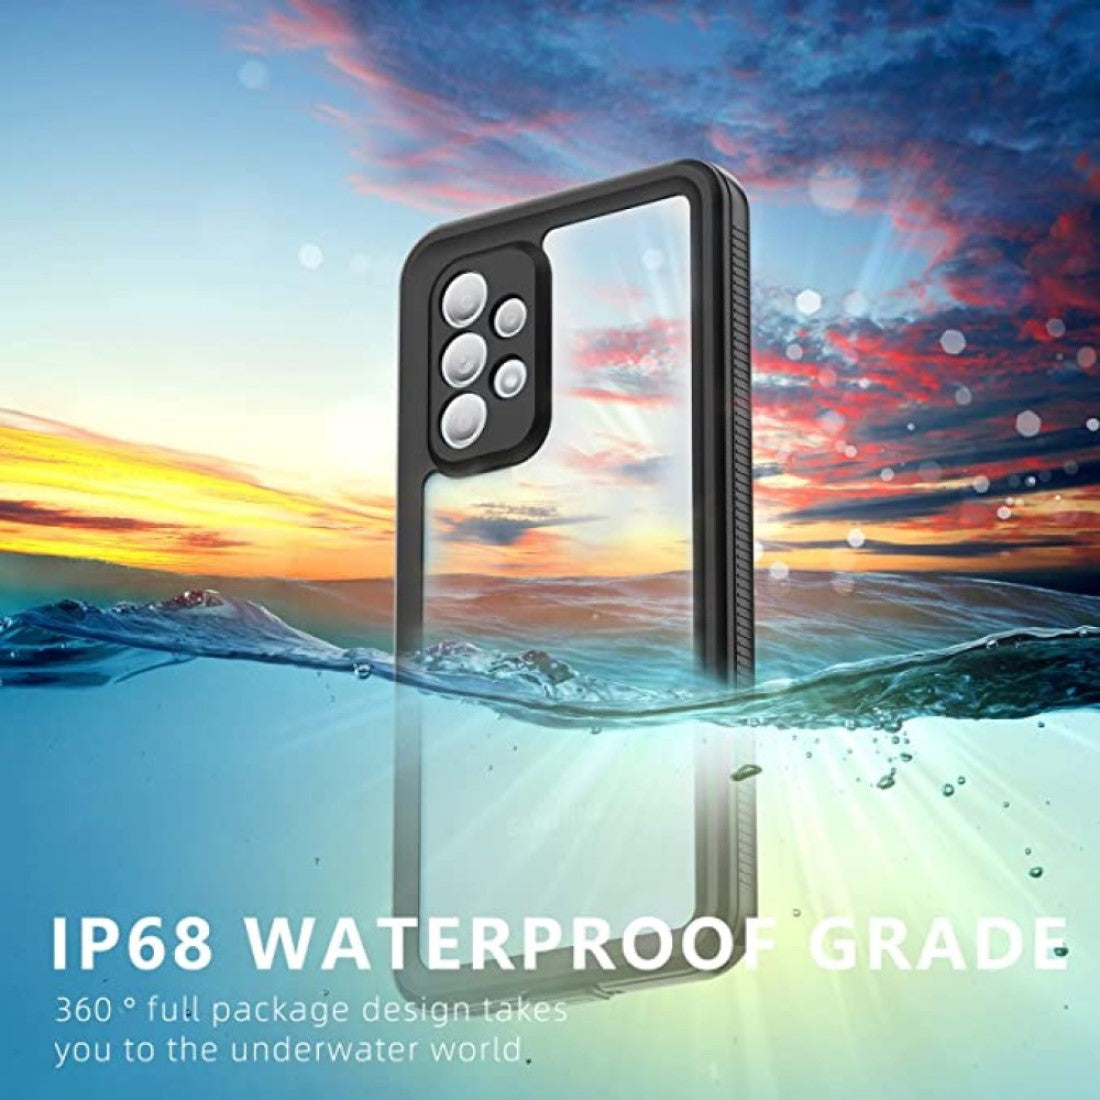 ( Black ) Waterproof Slim Life Proof Case for Samsung S22 Ultra Built-in Screen Protector Shockproof Dustproof Heavy Duty Full Body Protective Case